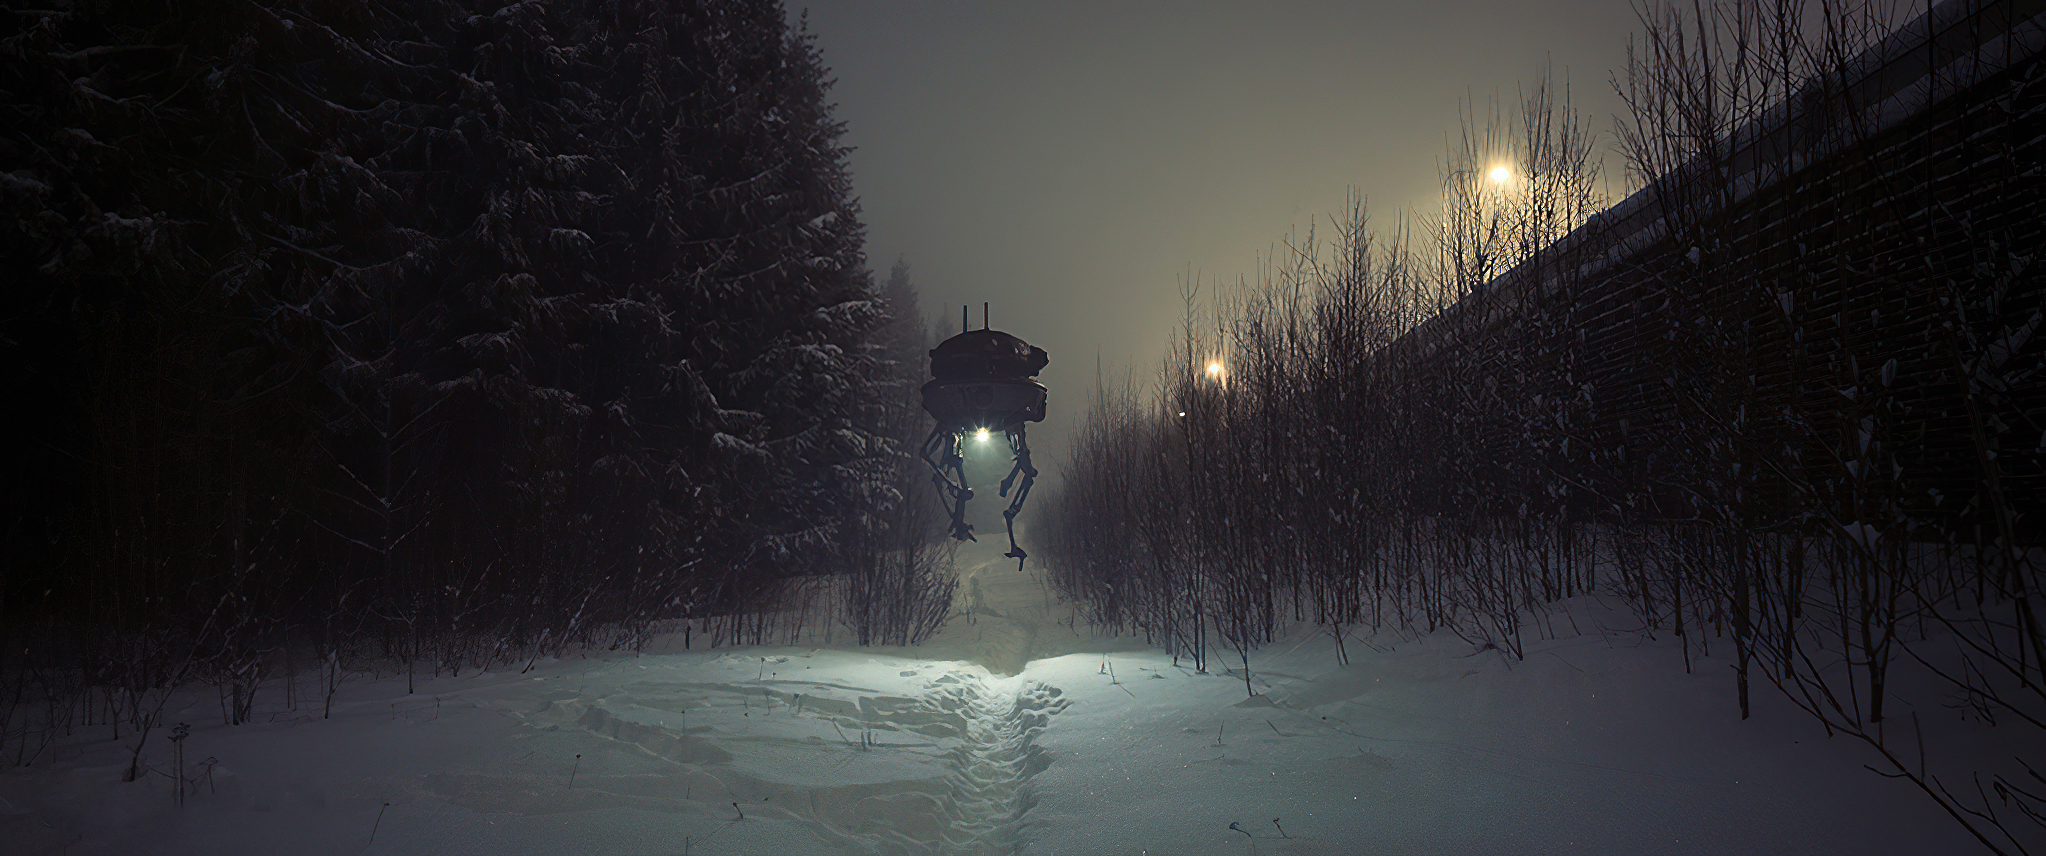 Science Fiction Robot Winter Snow Night Path Trees Bushes Wall Lights Dark Mist Artwork Fantastic Re 2046x856